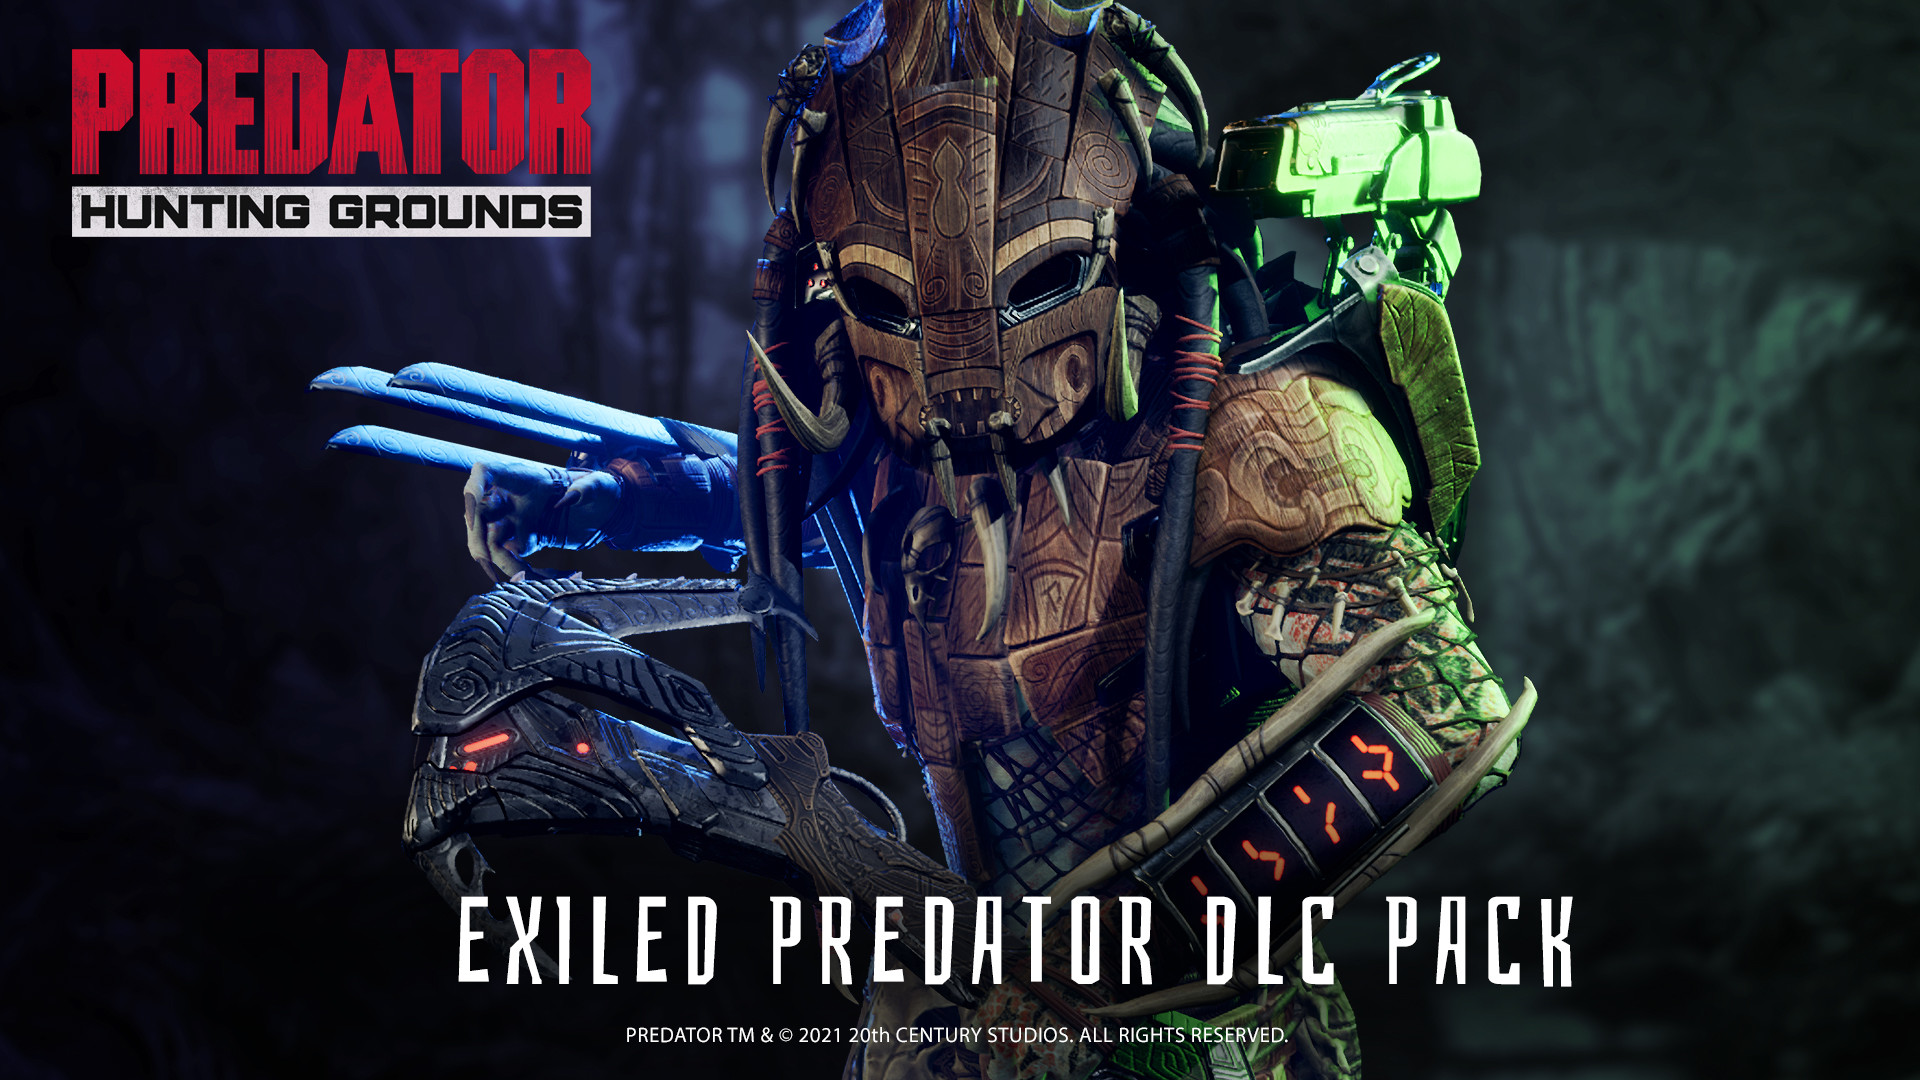 [$ 2.01] Predator: Hunting Grounds - Exiled Predator DLC Pack Steam CD Key